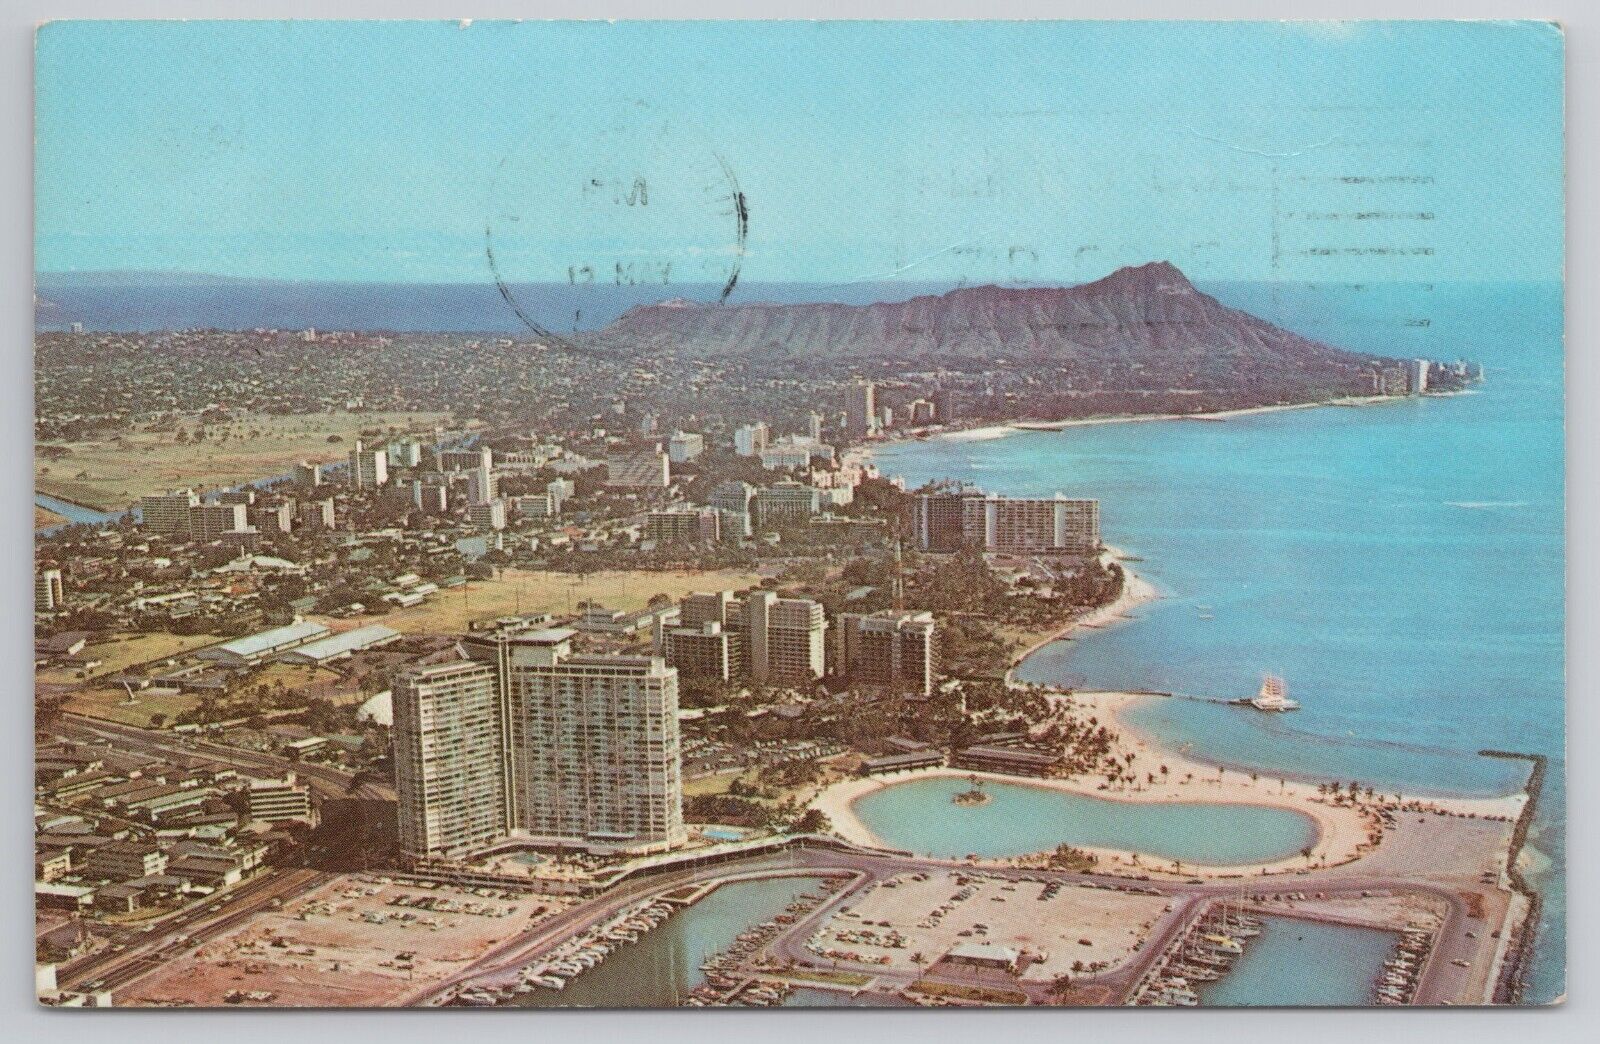 Honolulu Waikiki Beach Aerial View Hawaii HI 1960s Postcard Diamond Head